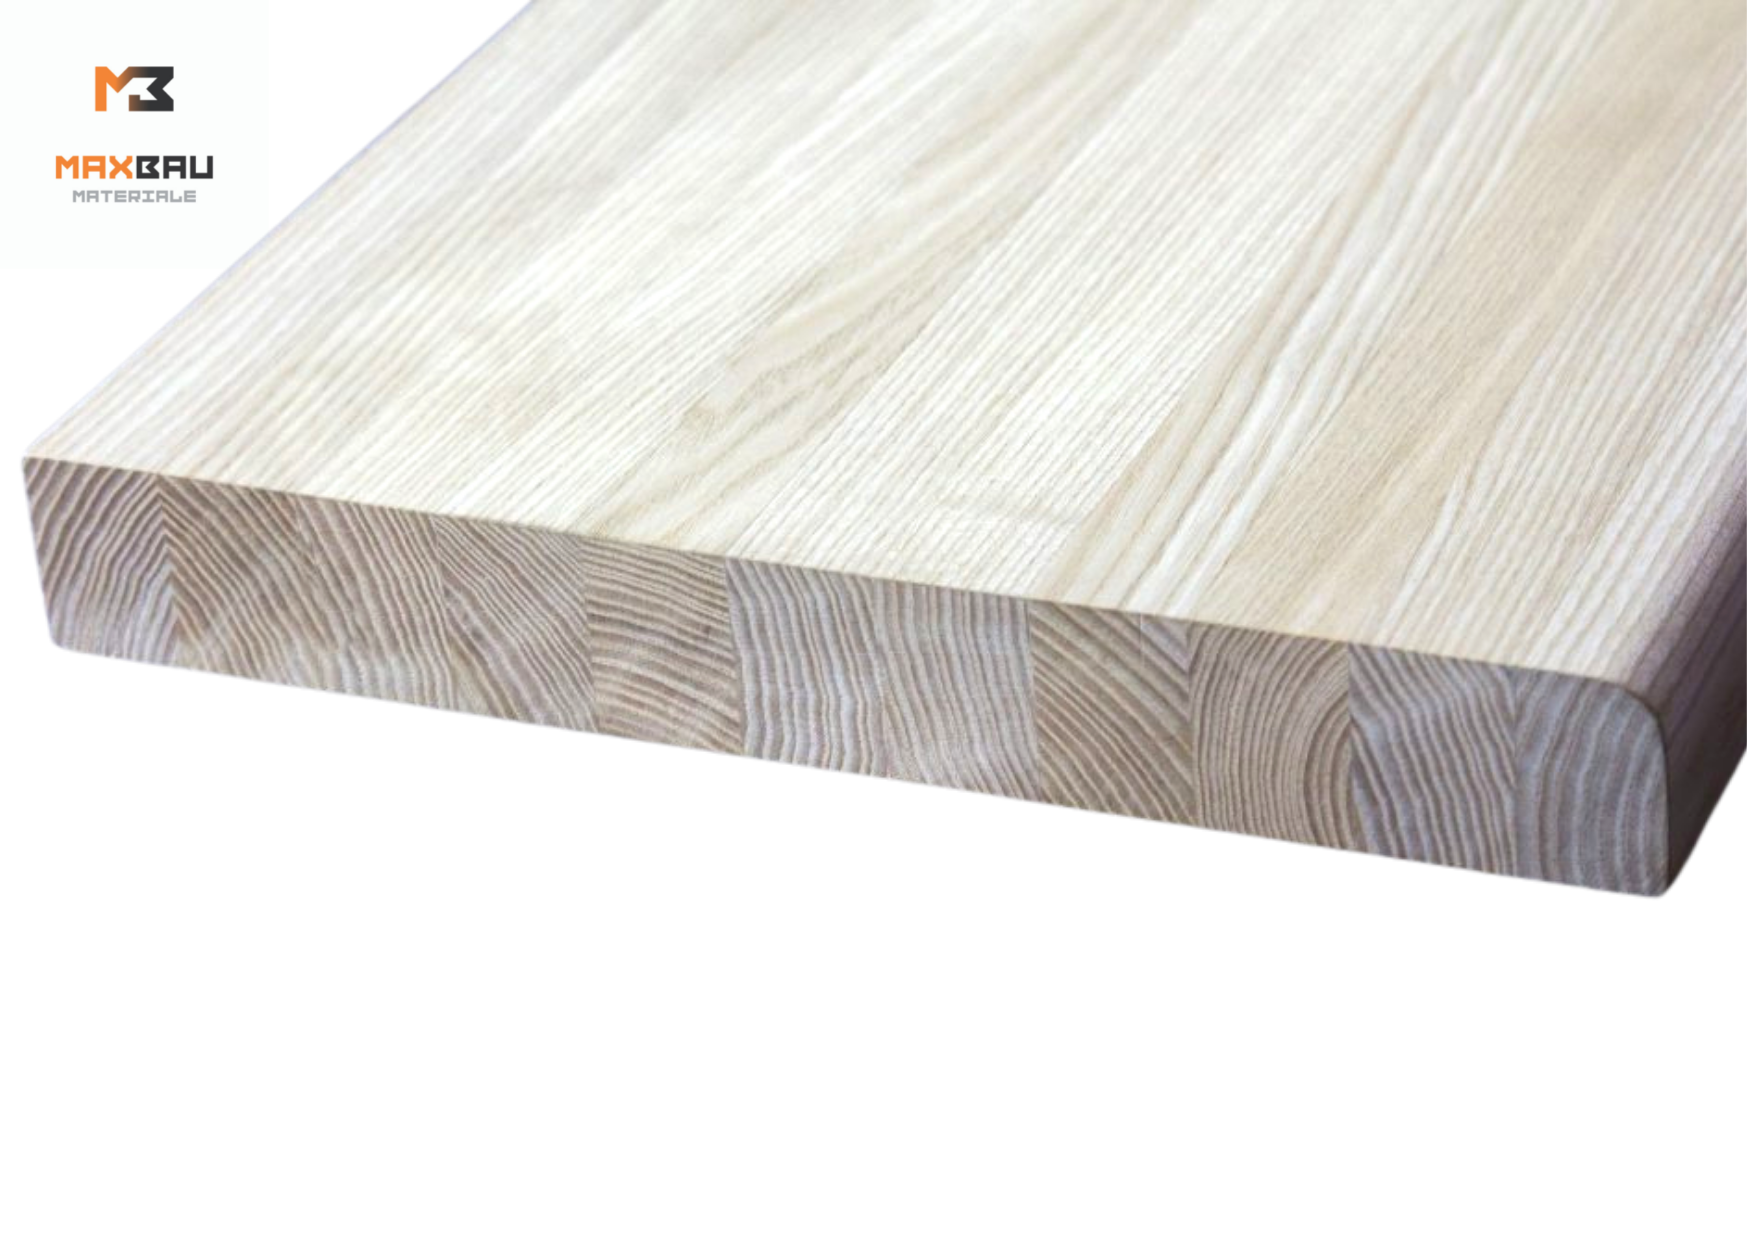 Plates of glued wood - MaxBau wooden plate glued 2500 x 200 x 28 mm AB Class, https:maxbau.ro